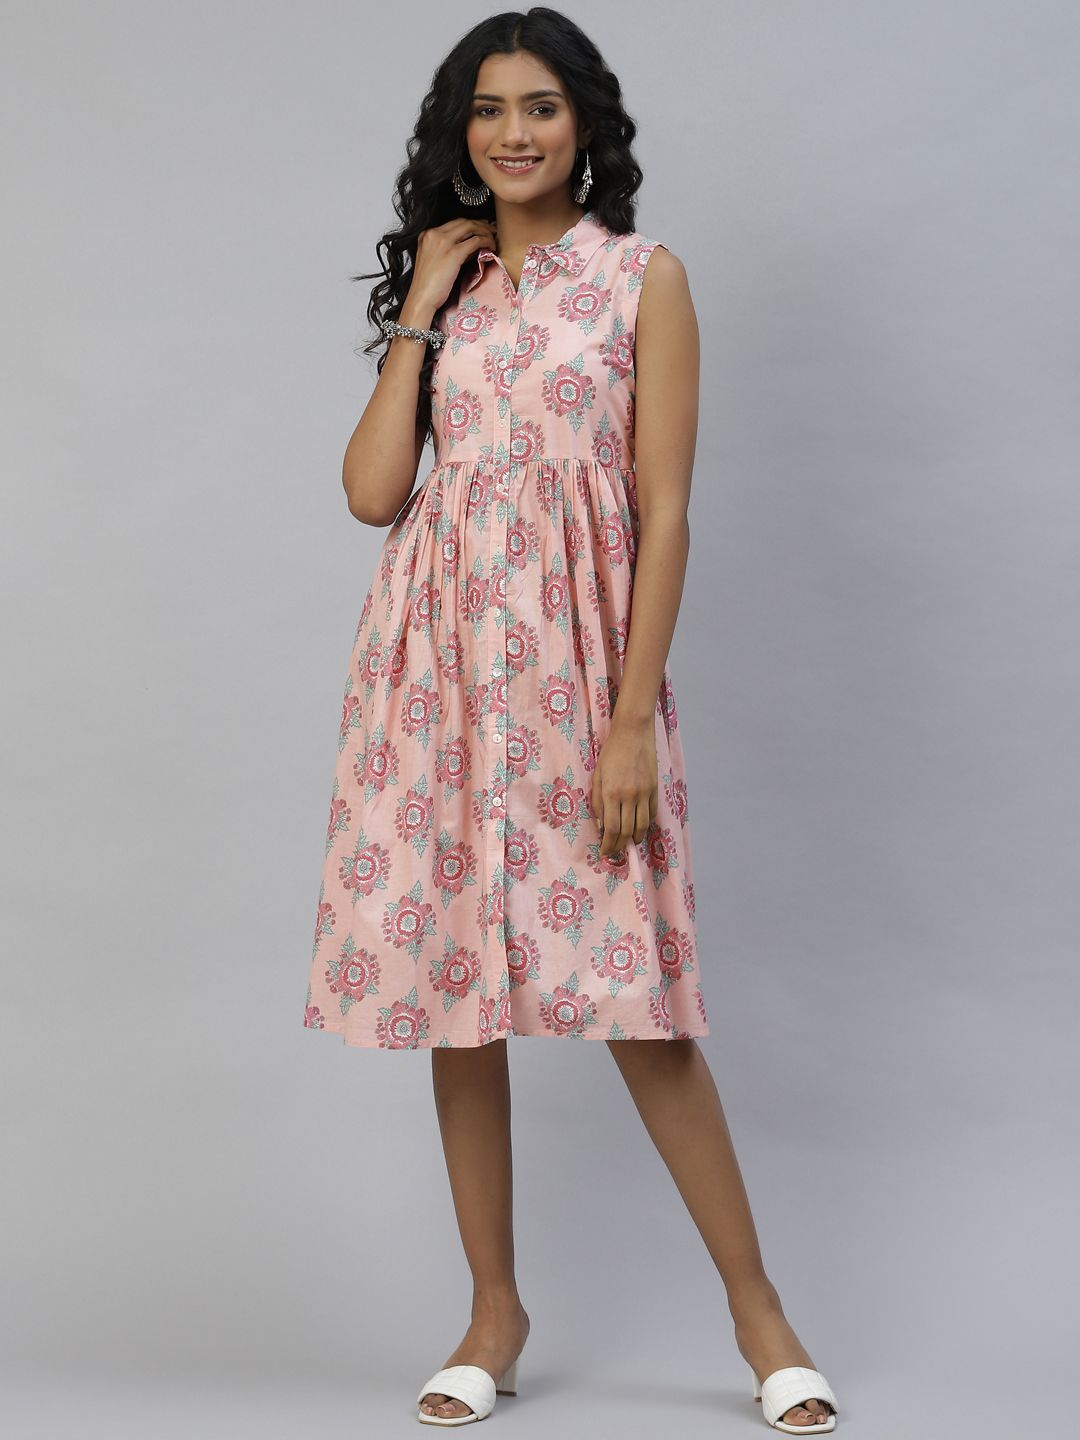 DESI BEATS Peach-Coloured Ethnic Motifs Shirt Dress Price in India